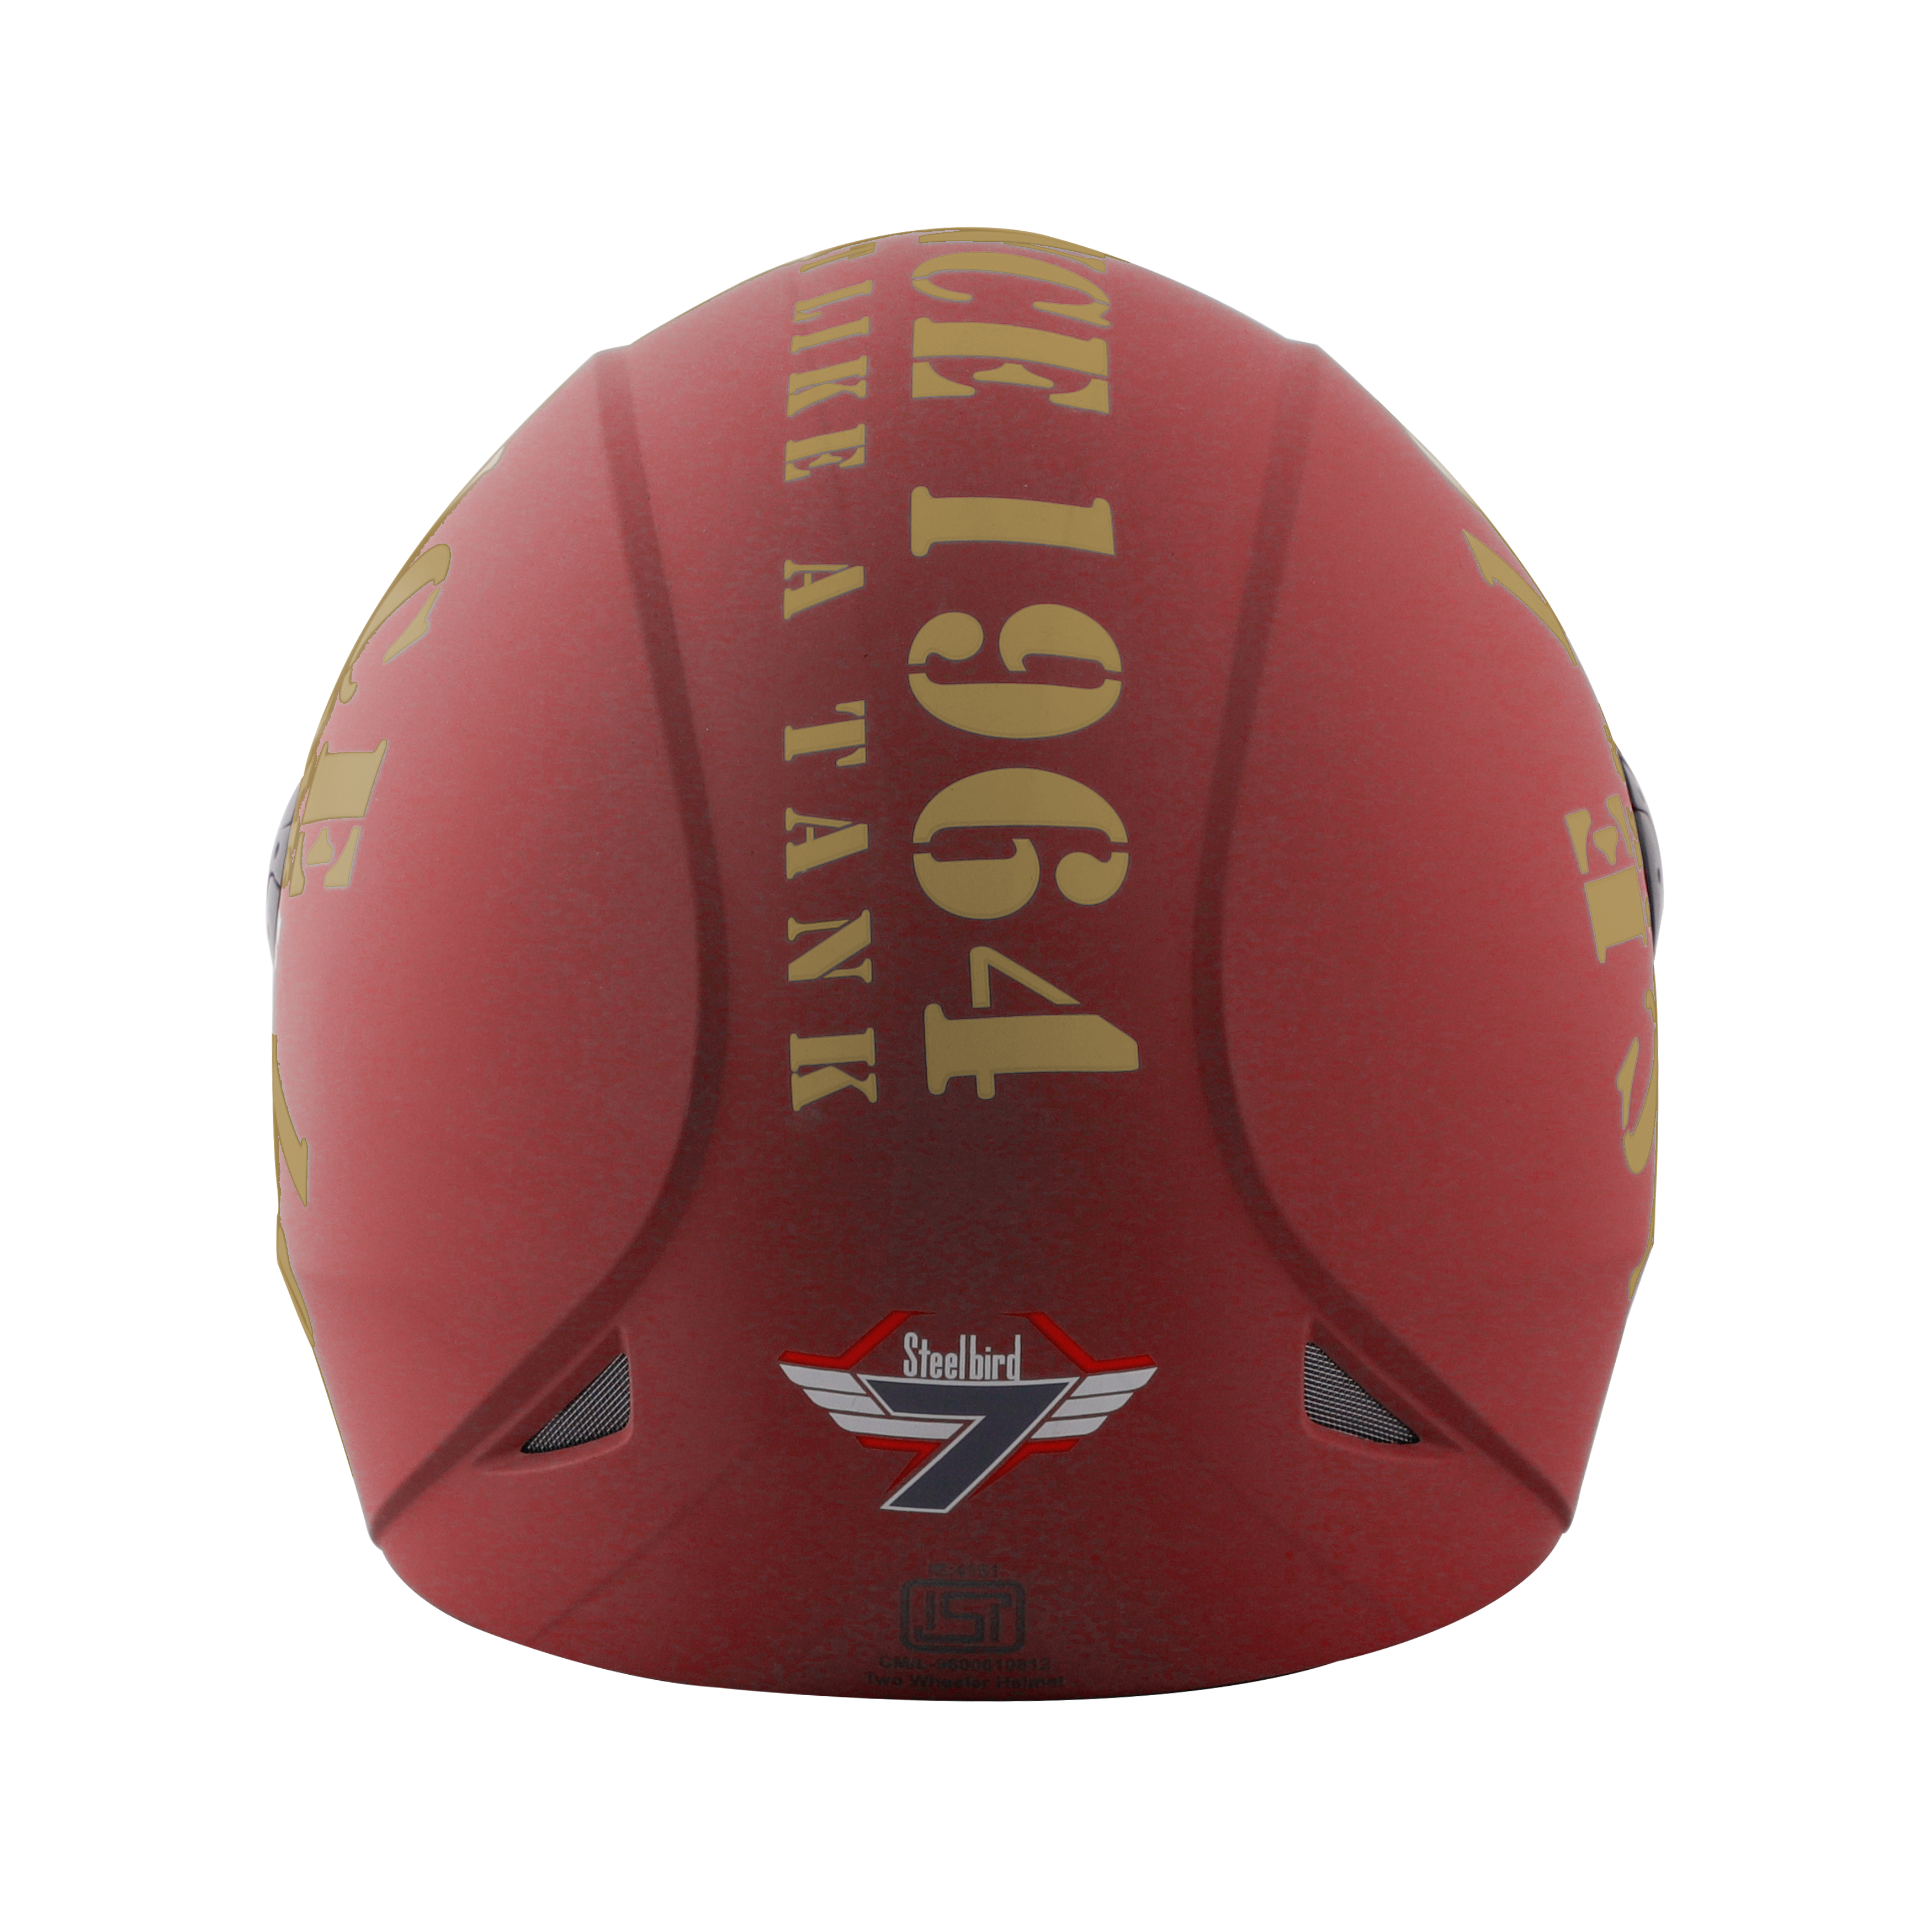 Steelbird SB-37 Zon Tank Full Face ISI Certified Graphic Helmet (Matt Maroon Gold With Smoke Visor)